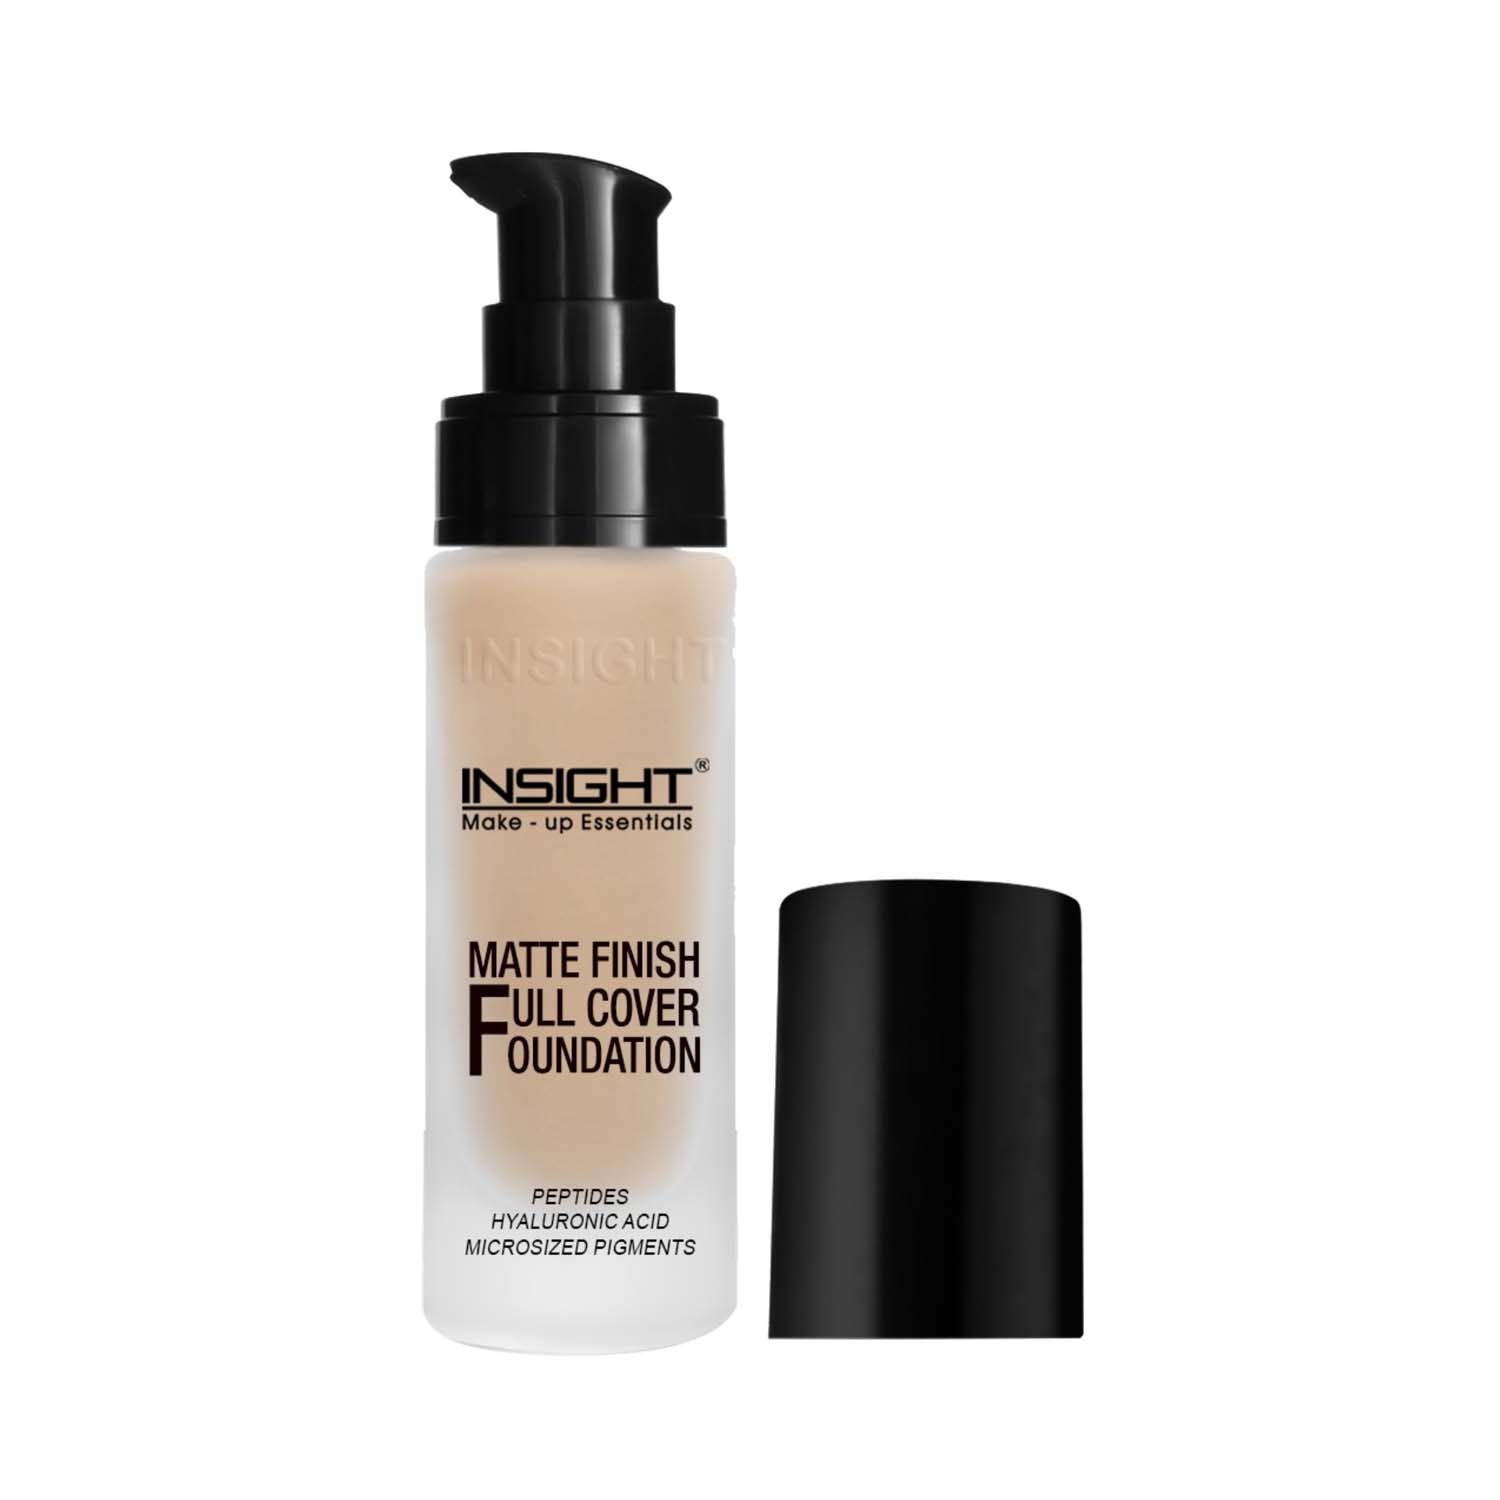 Insight Cosmetics | Insight Cosmetics Matte Finish Full Cover Foundation - MN16 (30ml)